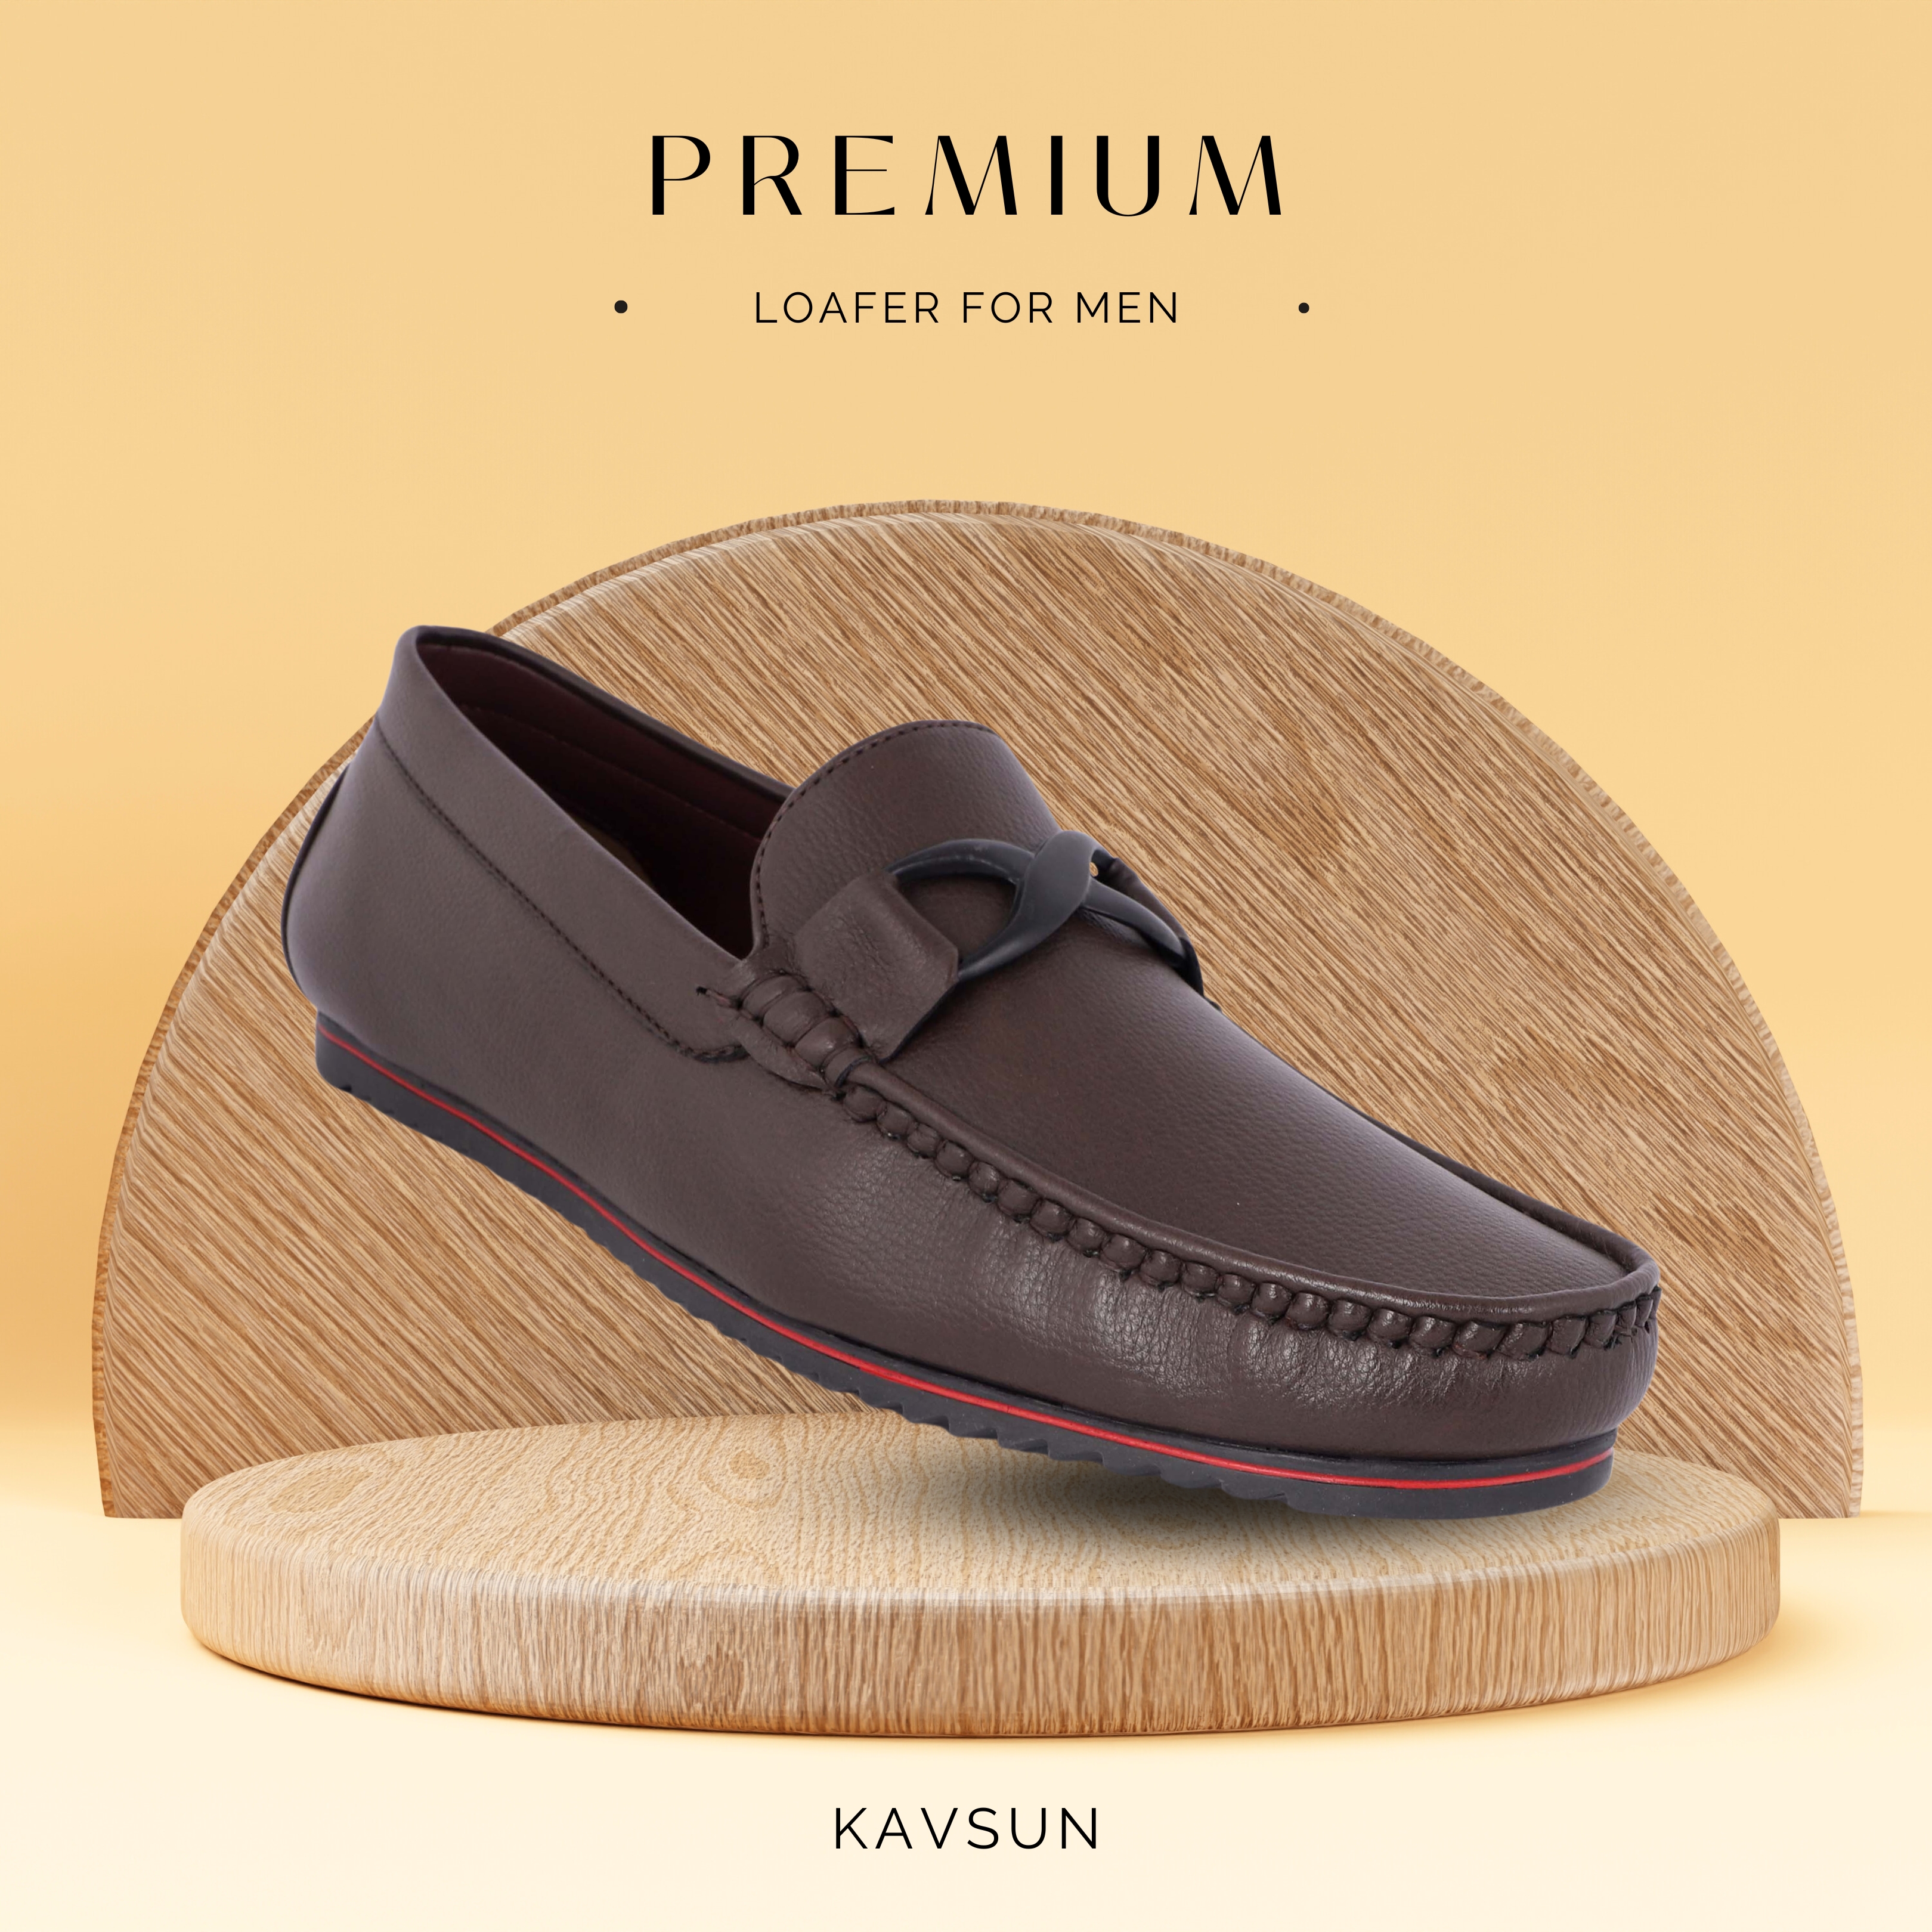 KAVSUN AttractivePremium Loafer For Men